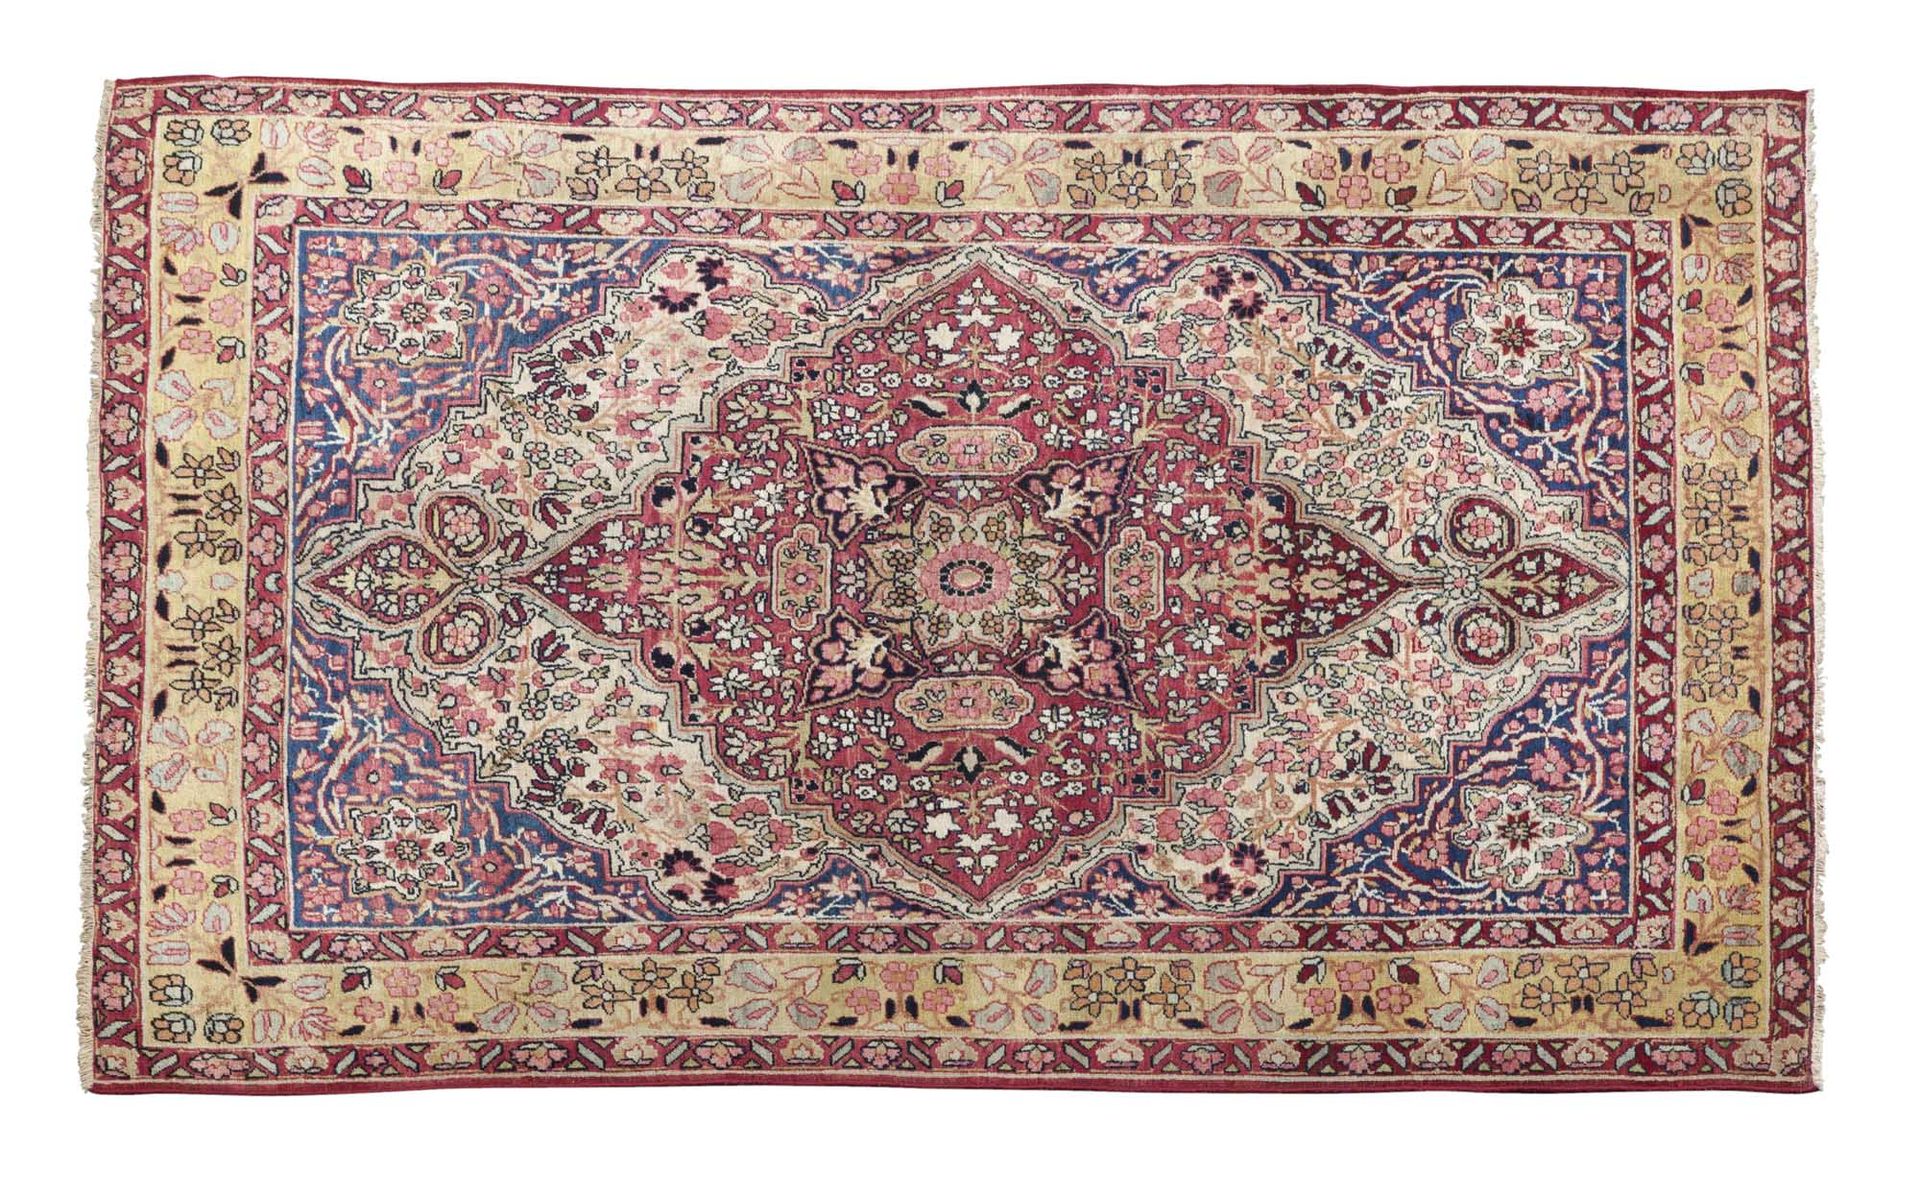 Null 基尔曼地毯（波斯），19世纪末

尺寸：200 x 132厘米

技术特点 : 羊毛天鹅绒，棉质底板。

象牙色的背景上有一个大的鲑鱼色的花纹徽章和四&hellip;